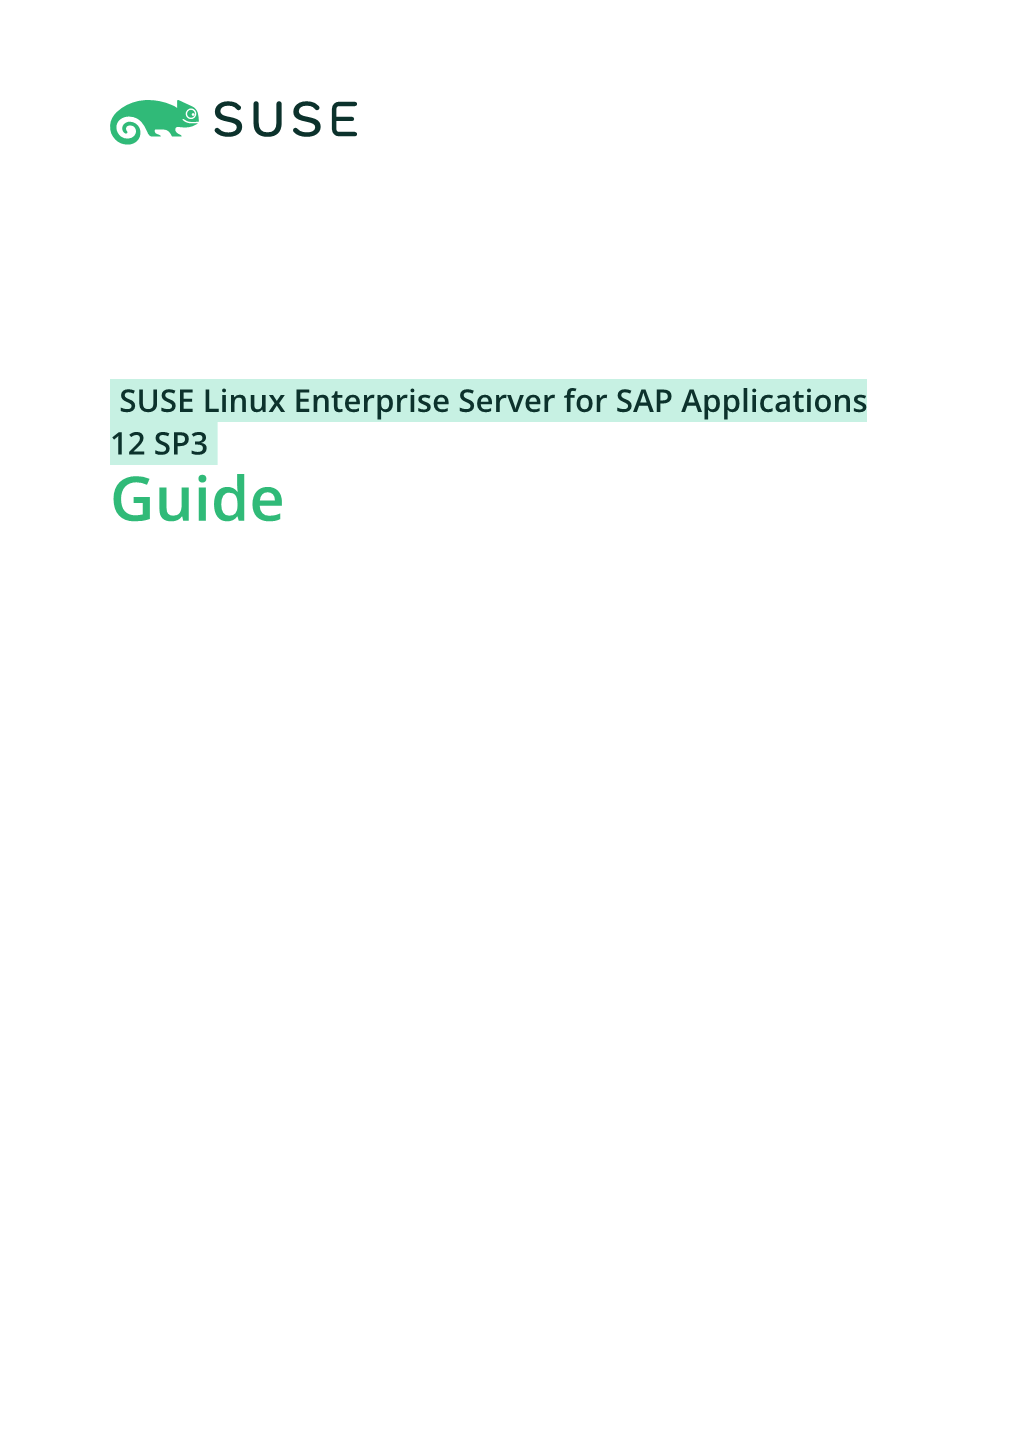 Guide Guide SUSE Linux Enterprise Server for SAP Applications 12 SP3